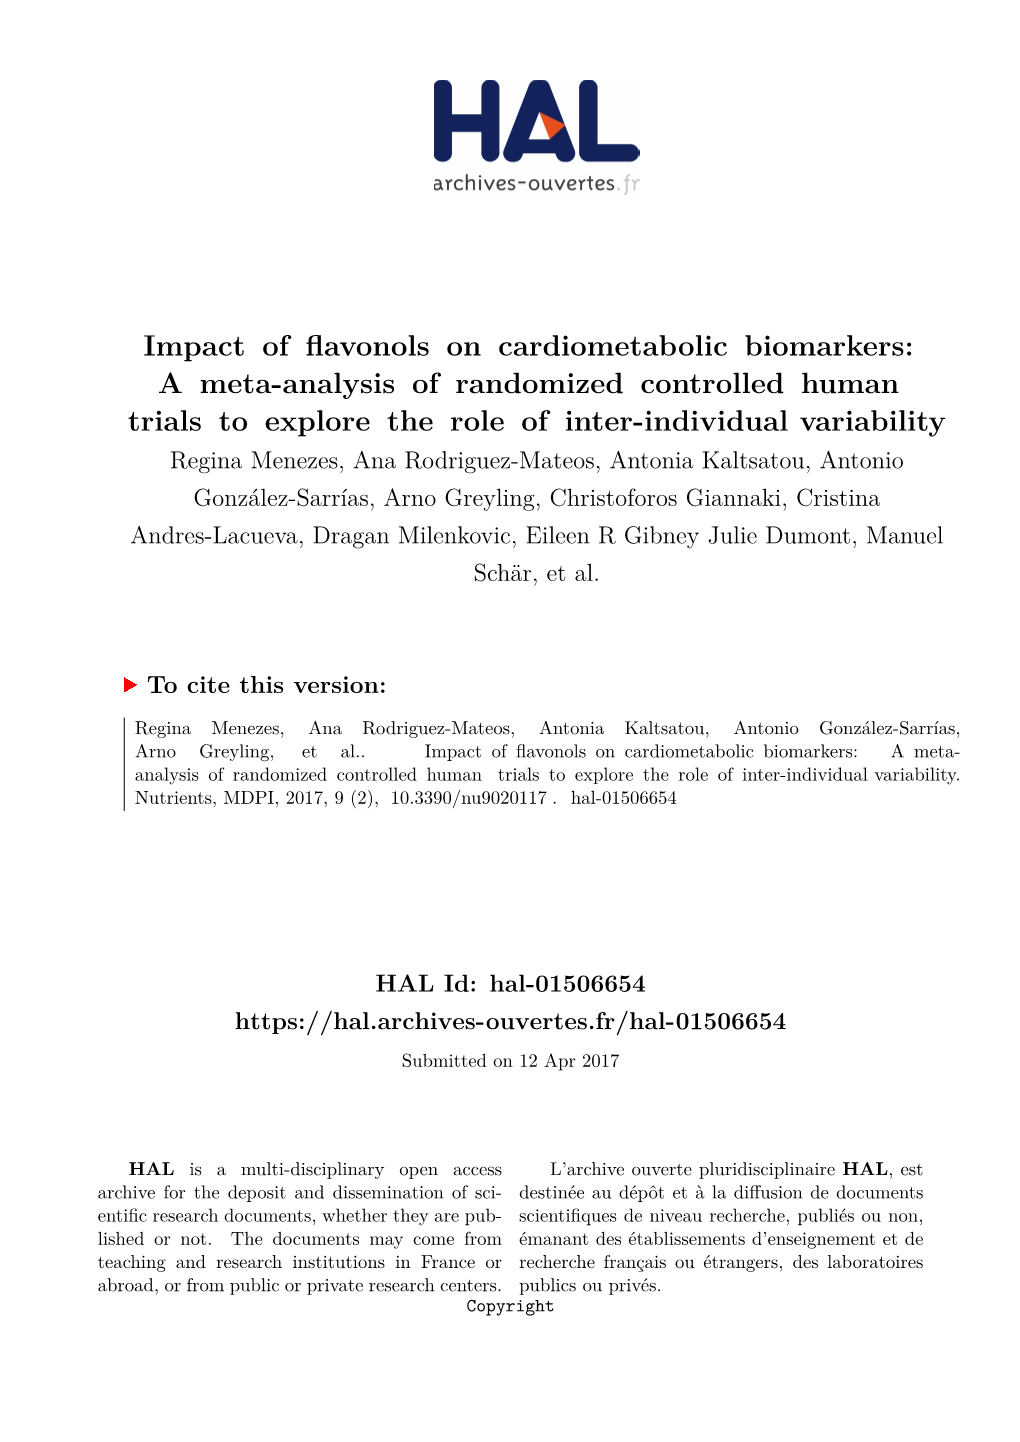 Impact of Flavonols on Cardiometabolic Biomarkers: a Meta-Analysis Of